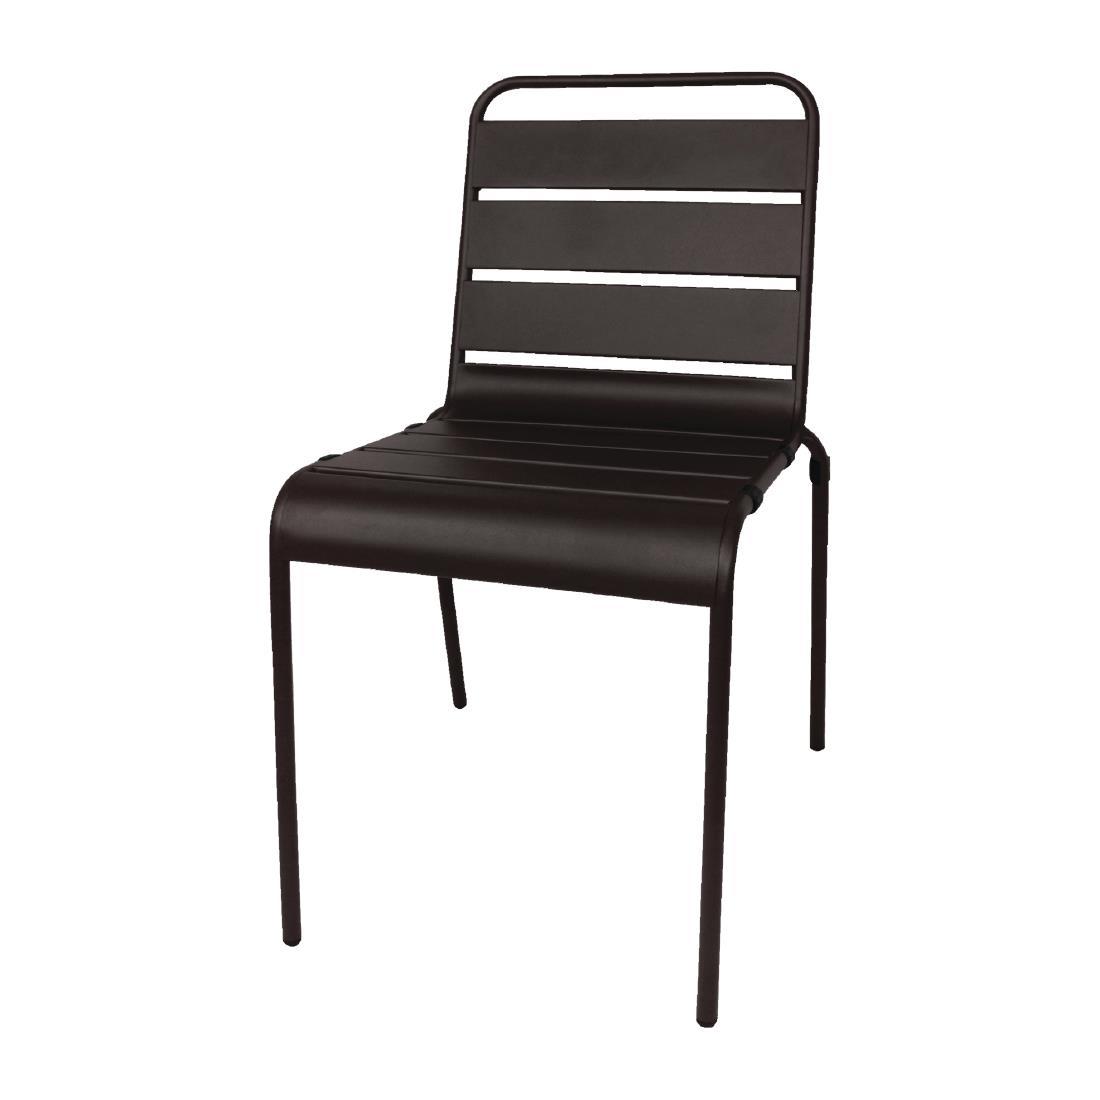 Bolero Black Slatted Steel Side Chairs (Pack of 4) - CS728  - 2